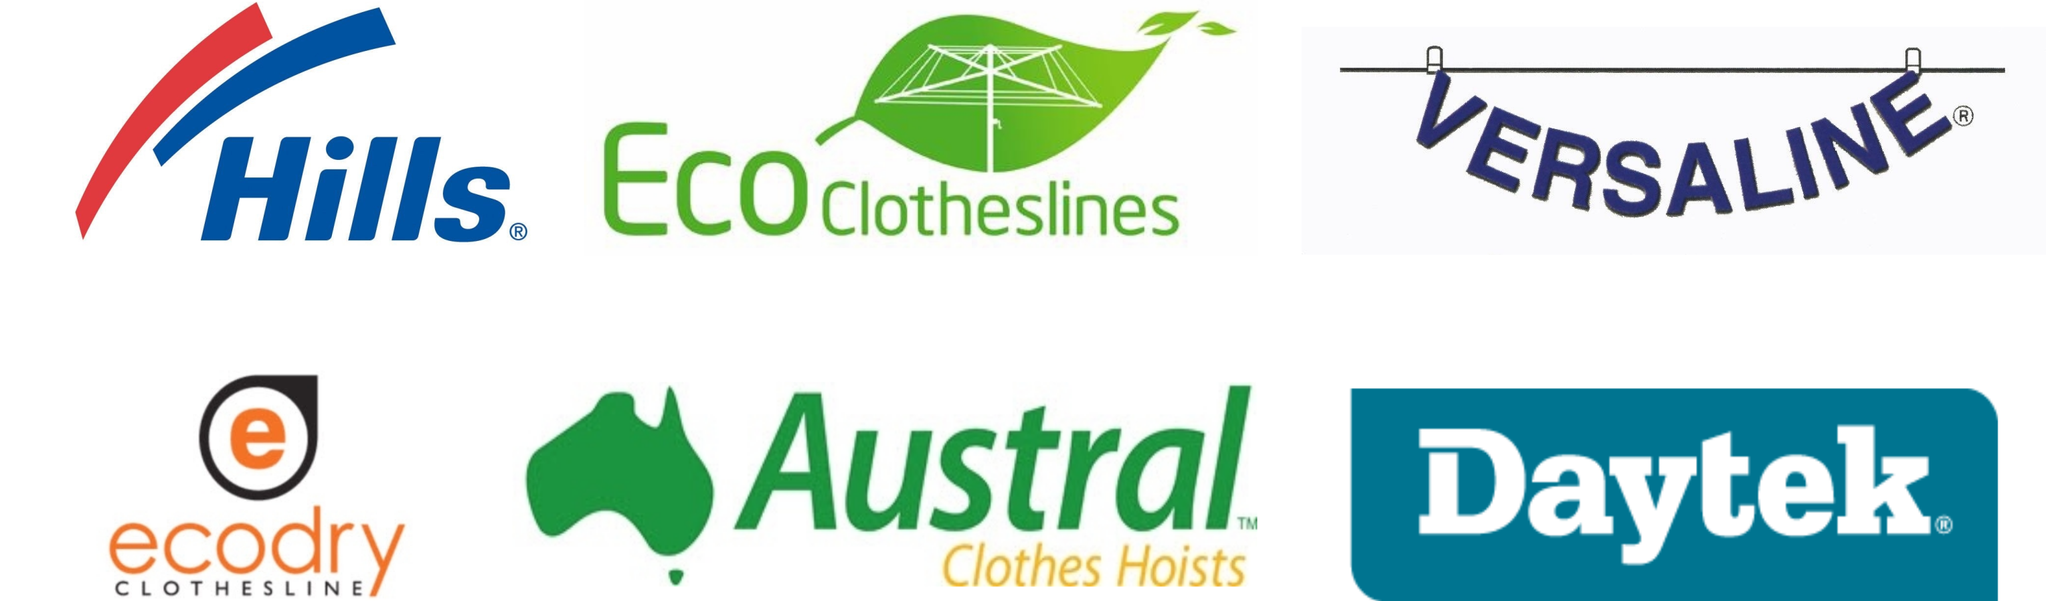 clotheslines_hills_Eco_versaline_ecodry_austral_daytek